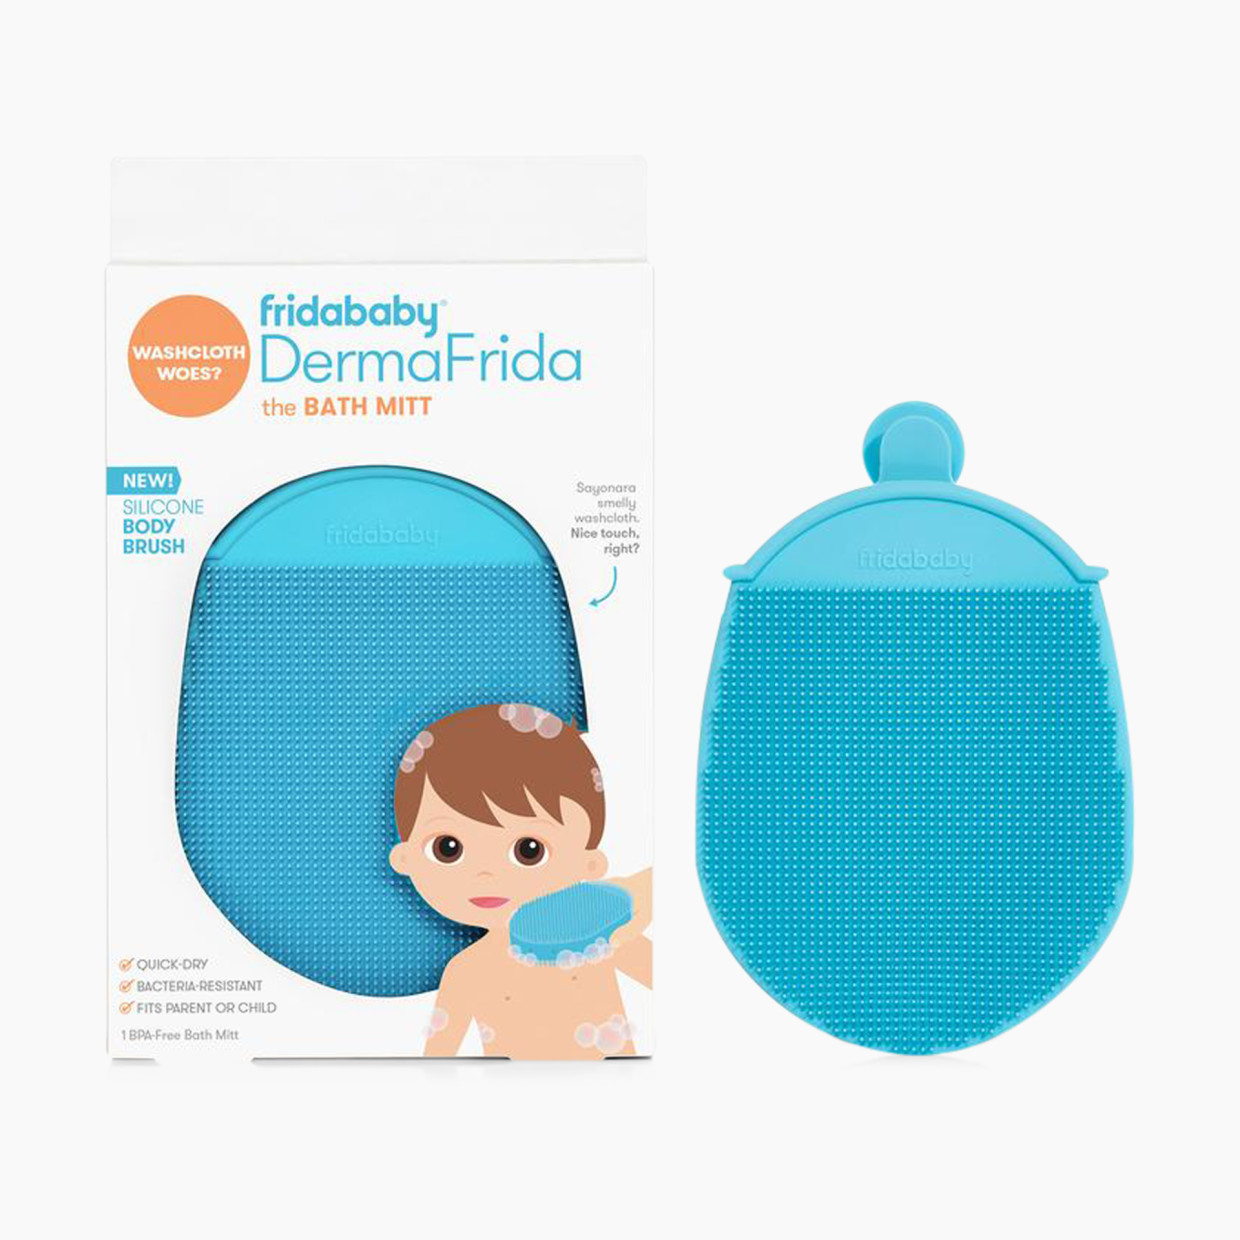 Fridababy - Baby Grooming Kit